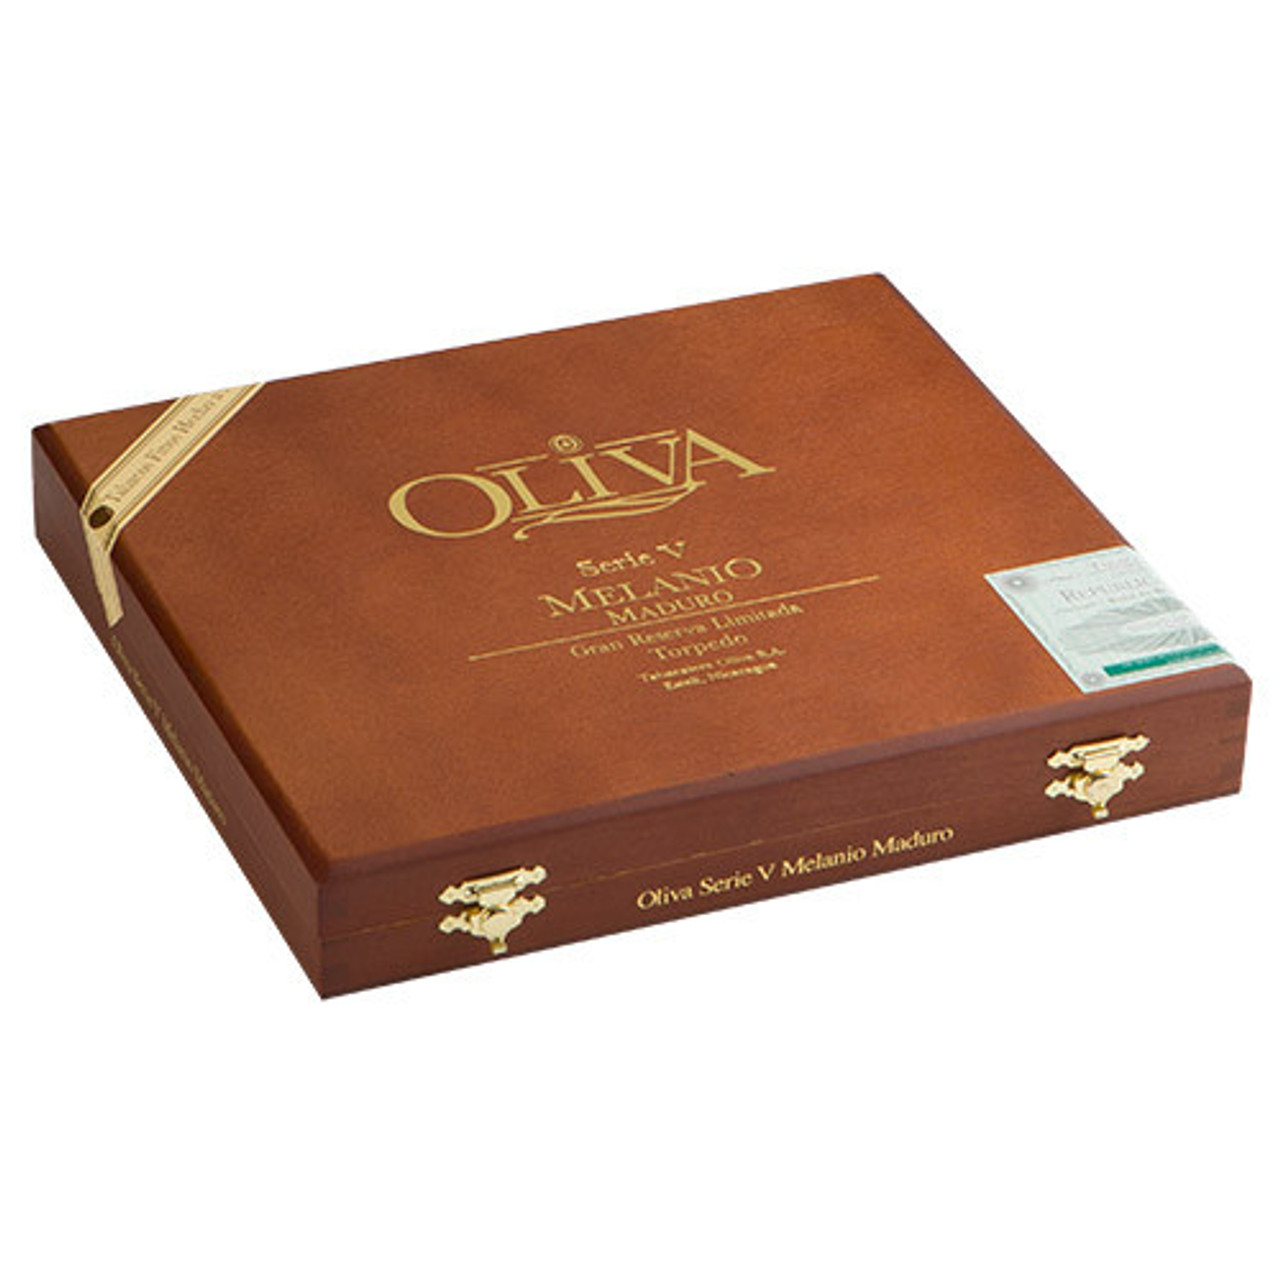 Oliva Serie V Melanio Double Toro Cigars - 6 x 60 (Box of 10) *Box